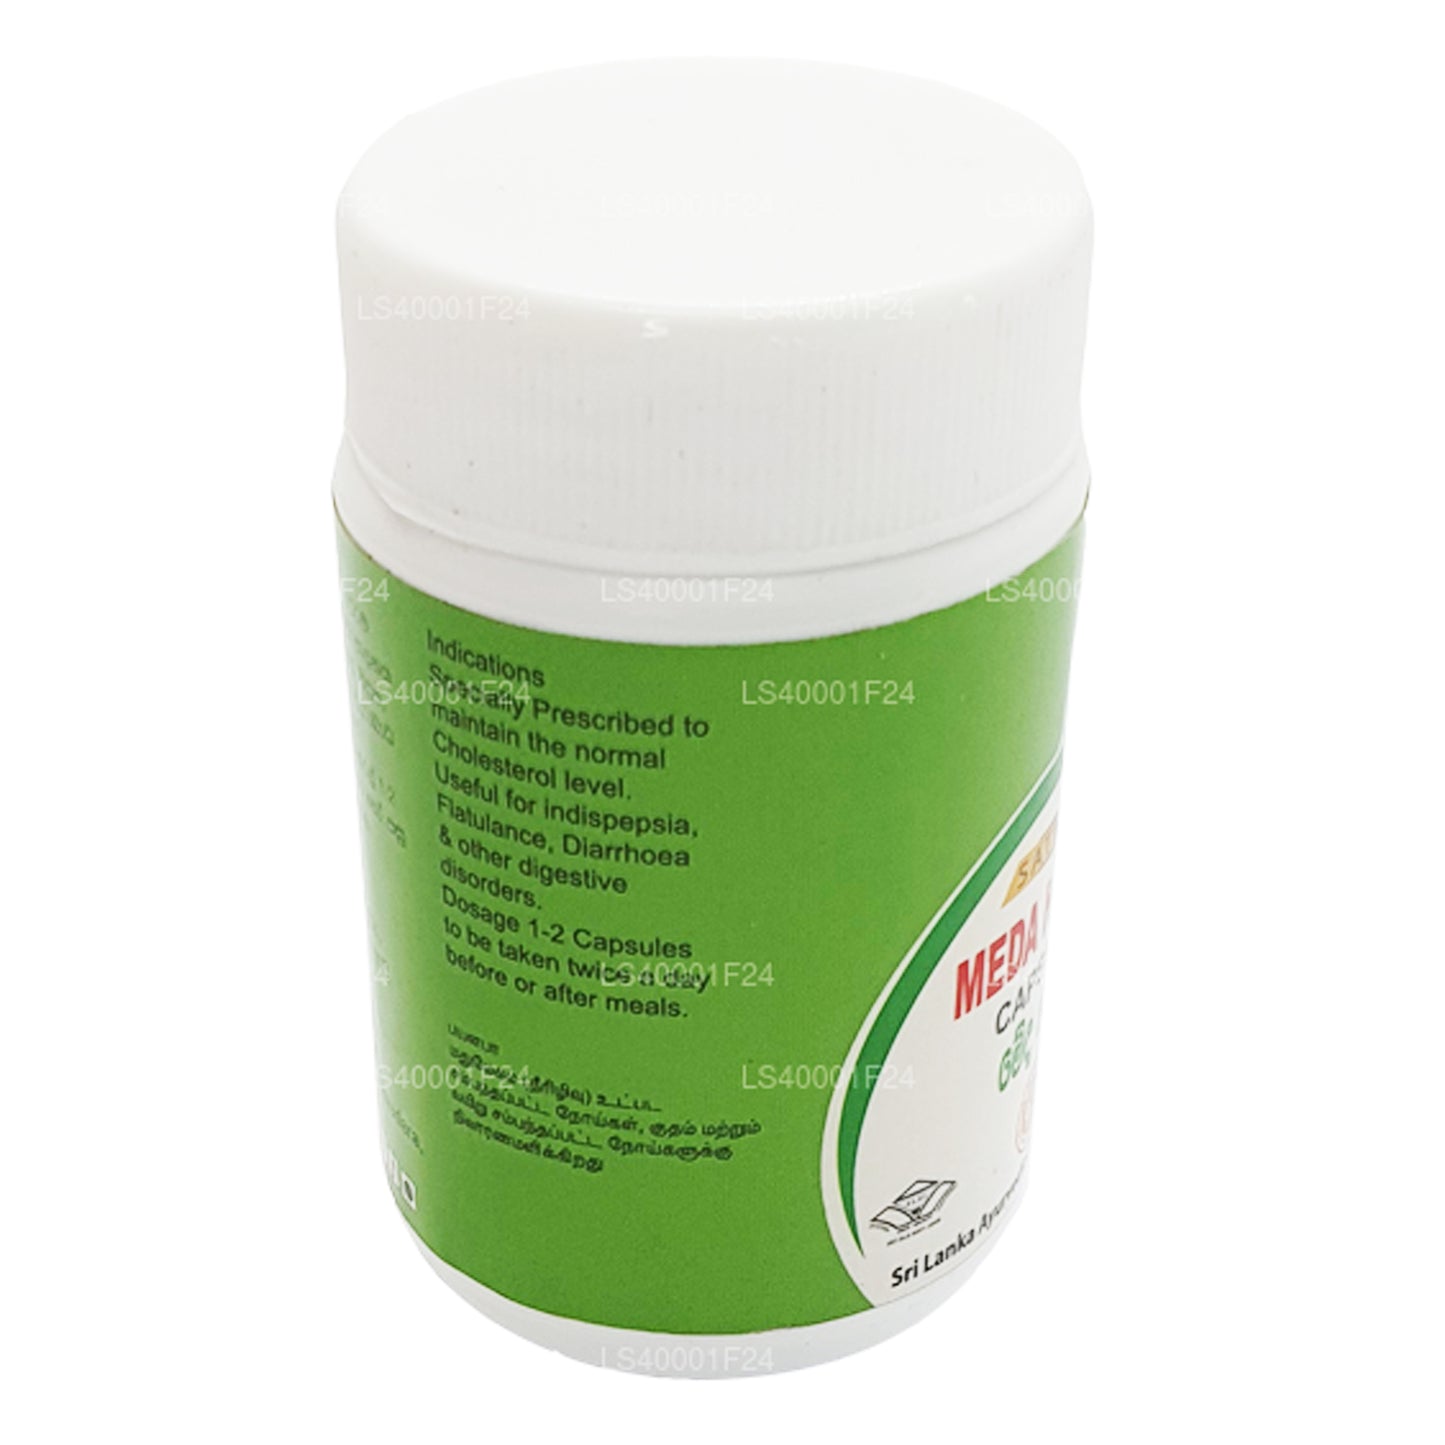 SLADC Meda Harani (500 mg x 60 Kapseln)